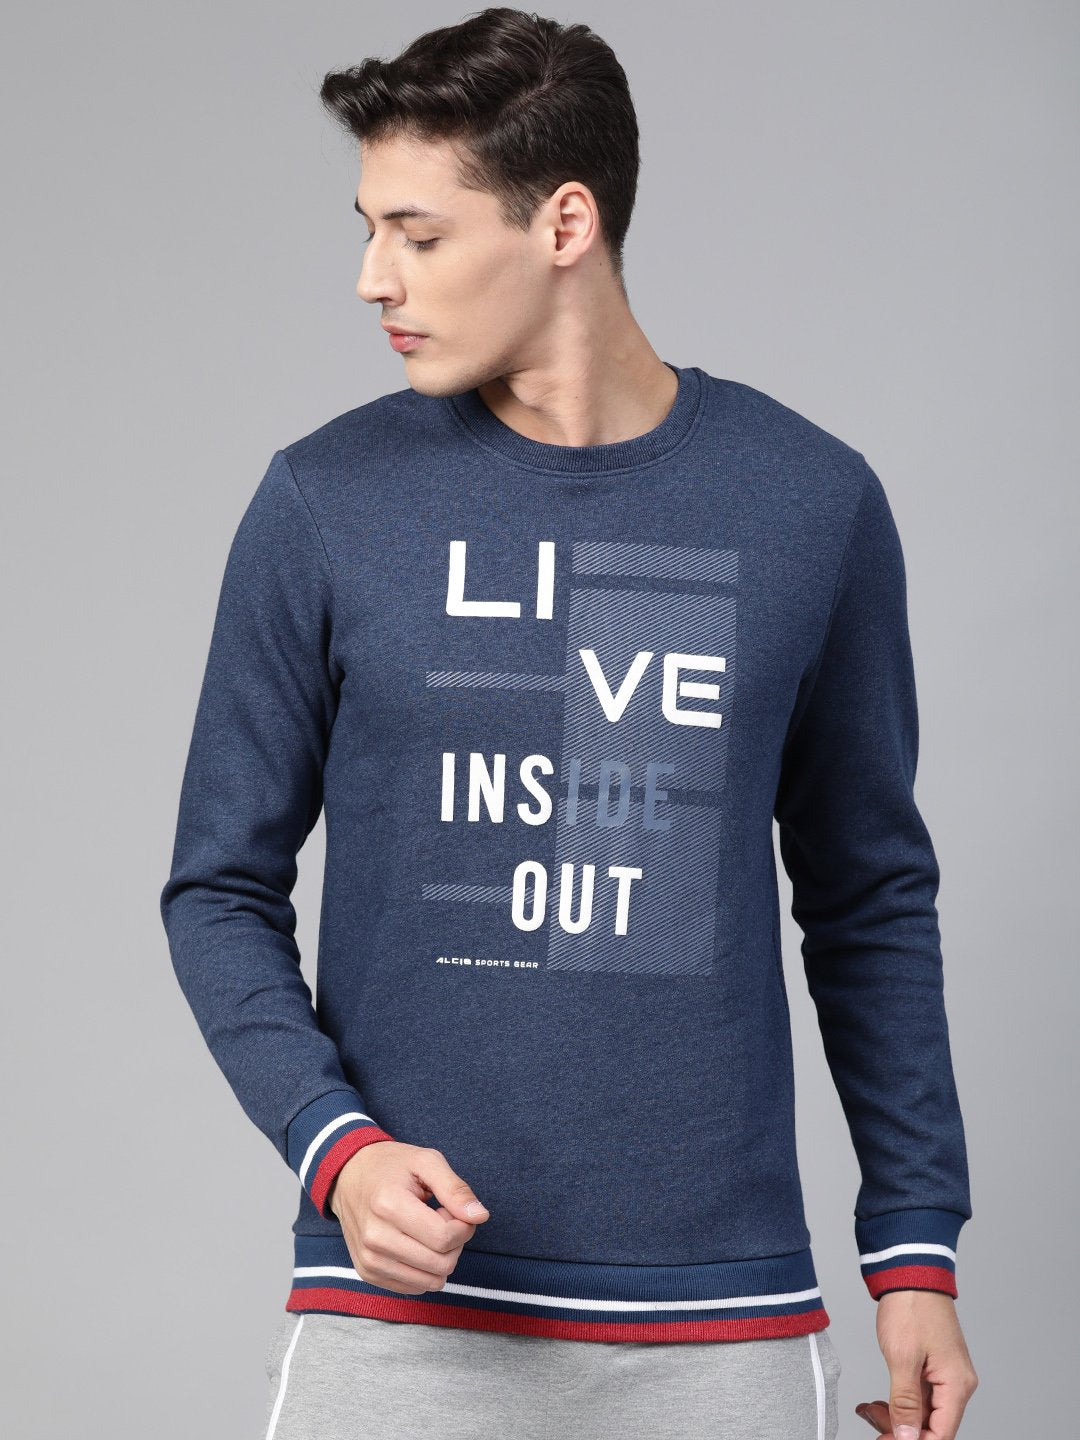 Alcis Men Navy Blue  White Printed Sports Sweatshirt